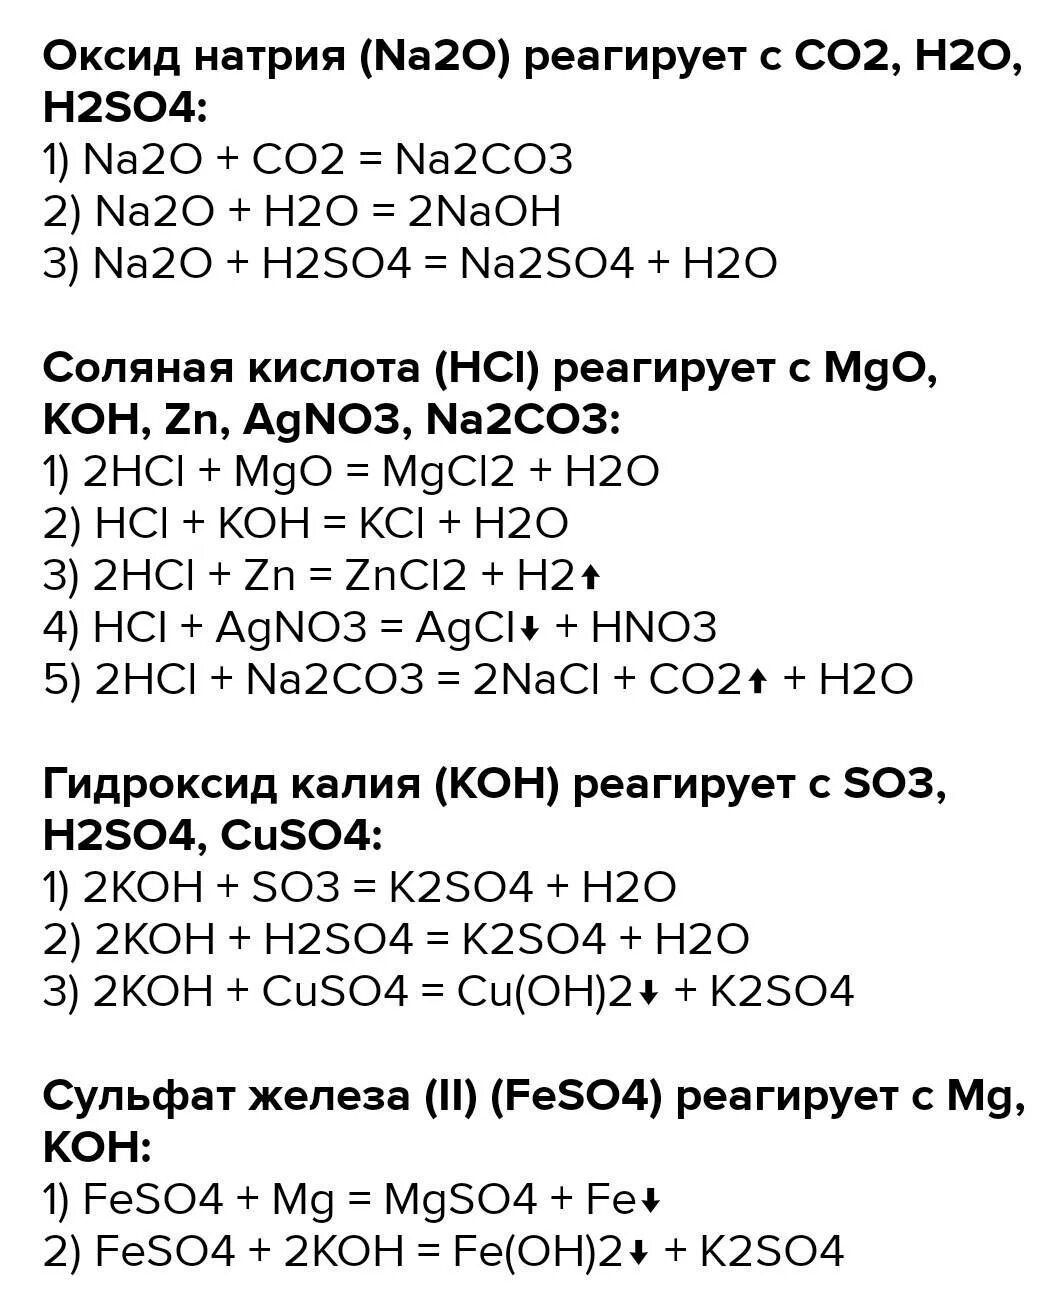 Al oh 3 co2 реакция. Реакция h2s+na. K+h2so4 уравнение химической реакции. Na2co3 реакция. Koh уравнение реакции.